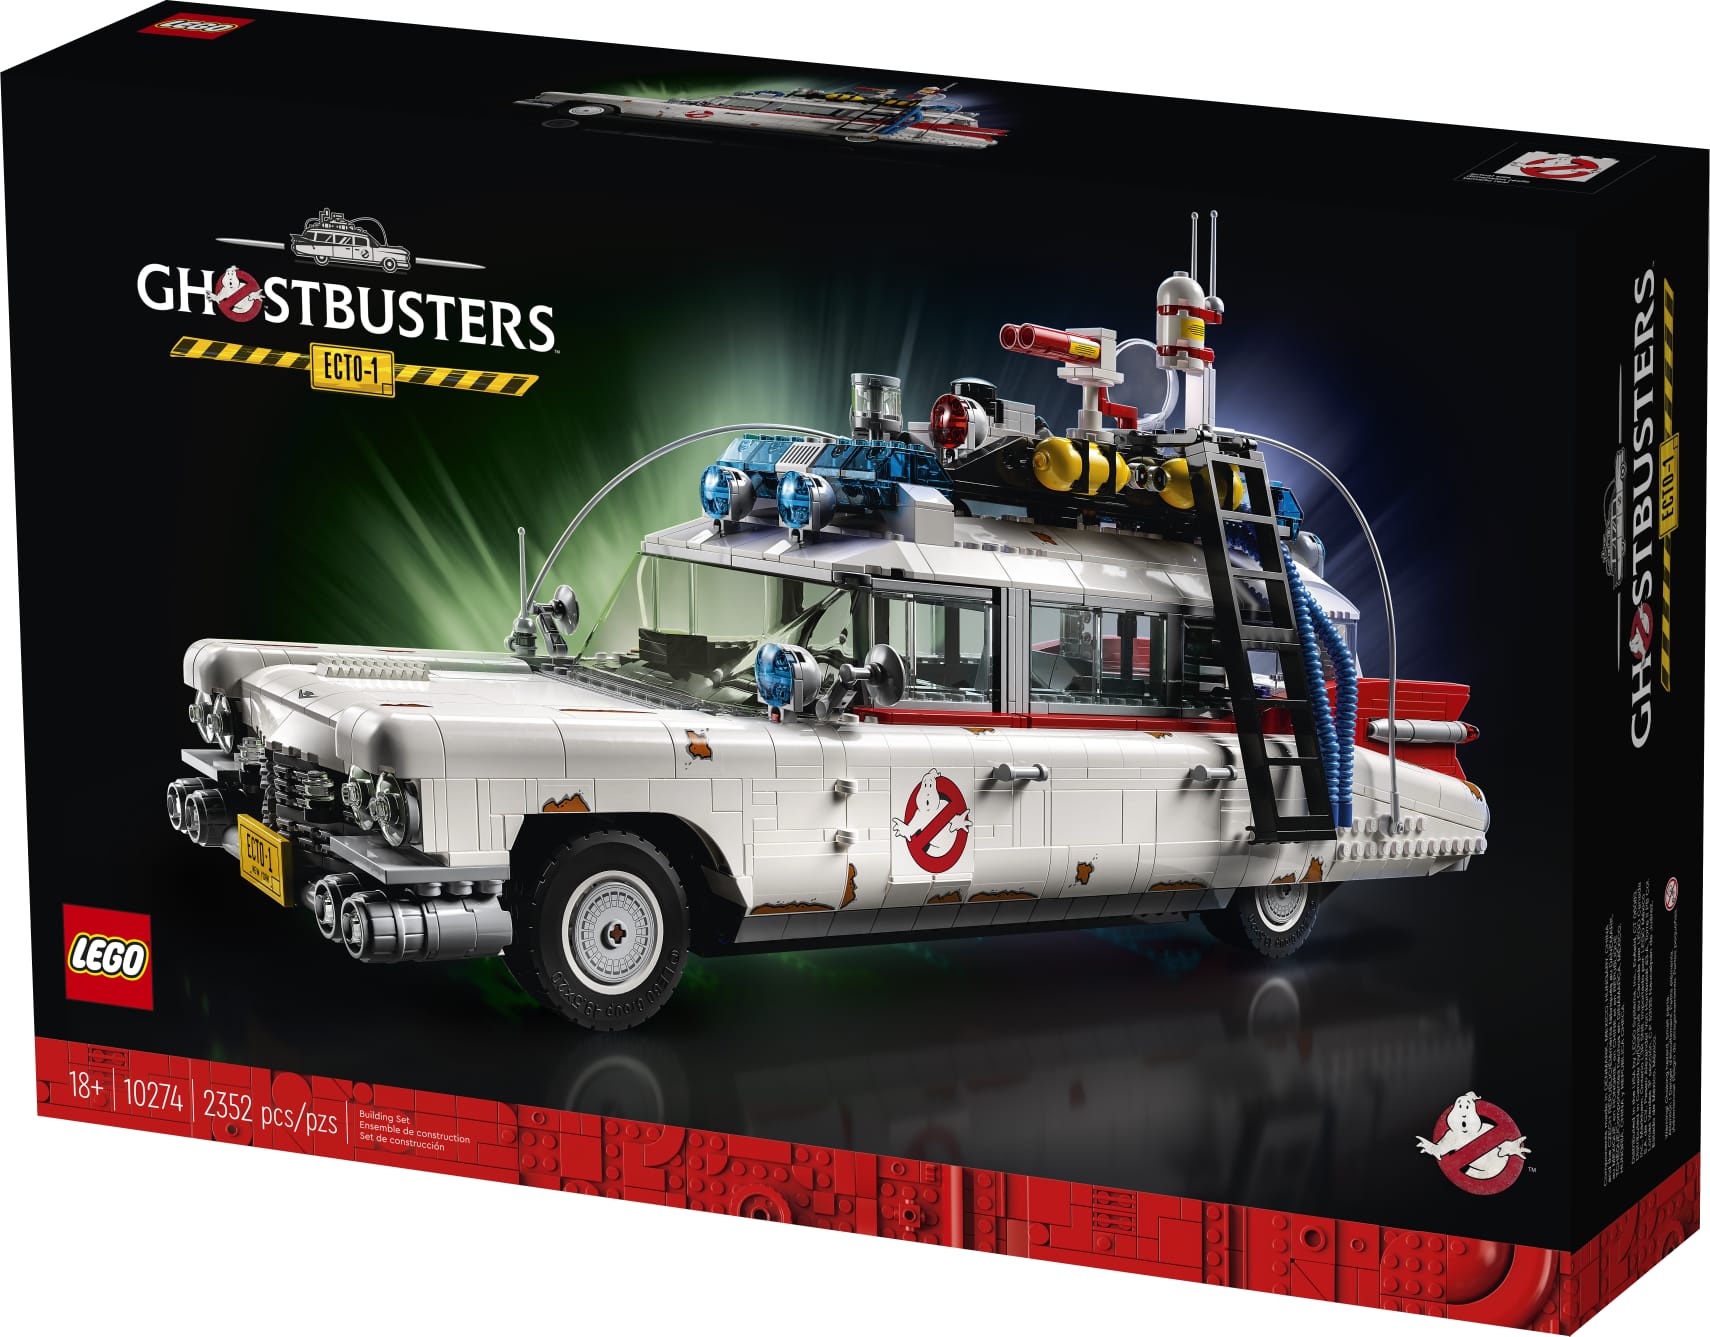 Lego Ghostbusters 10274 Creator Expert Ecto-1 disponibile dal 15 novembre!